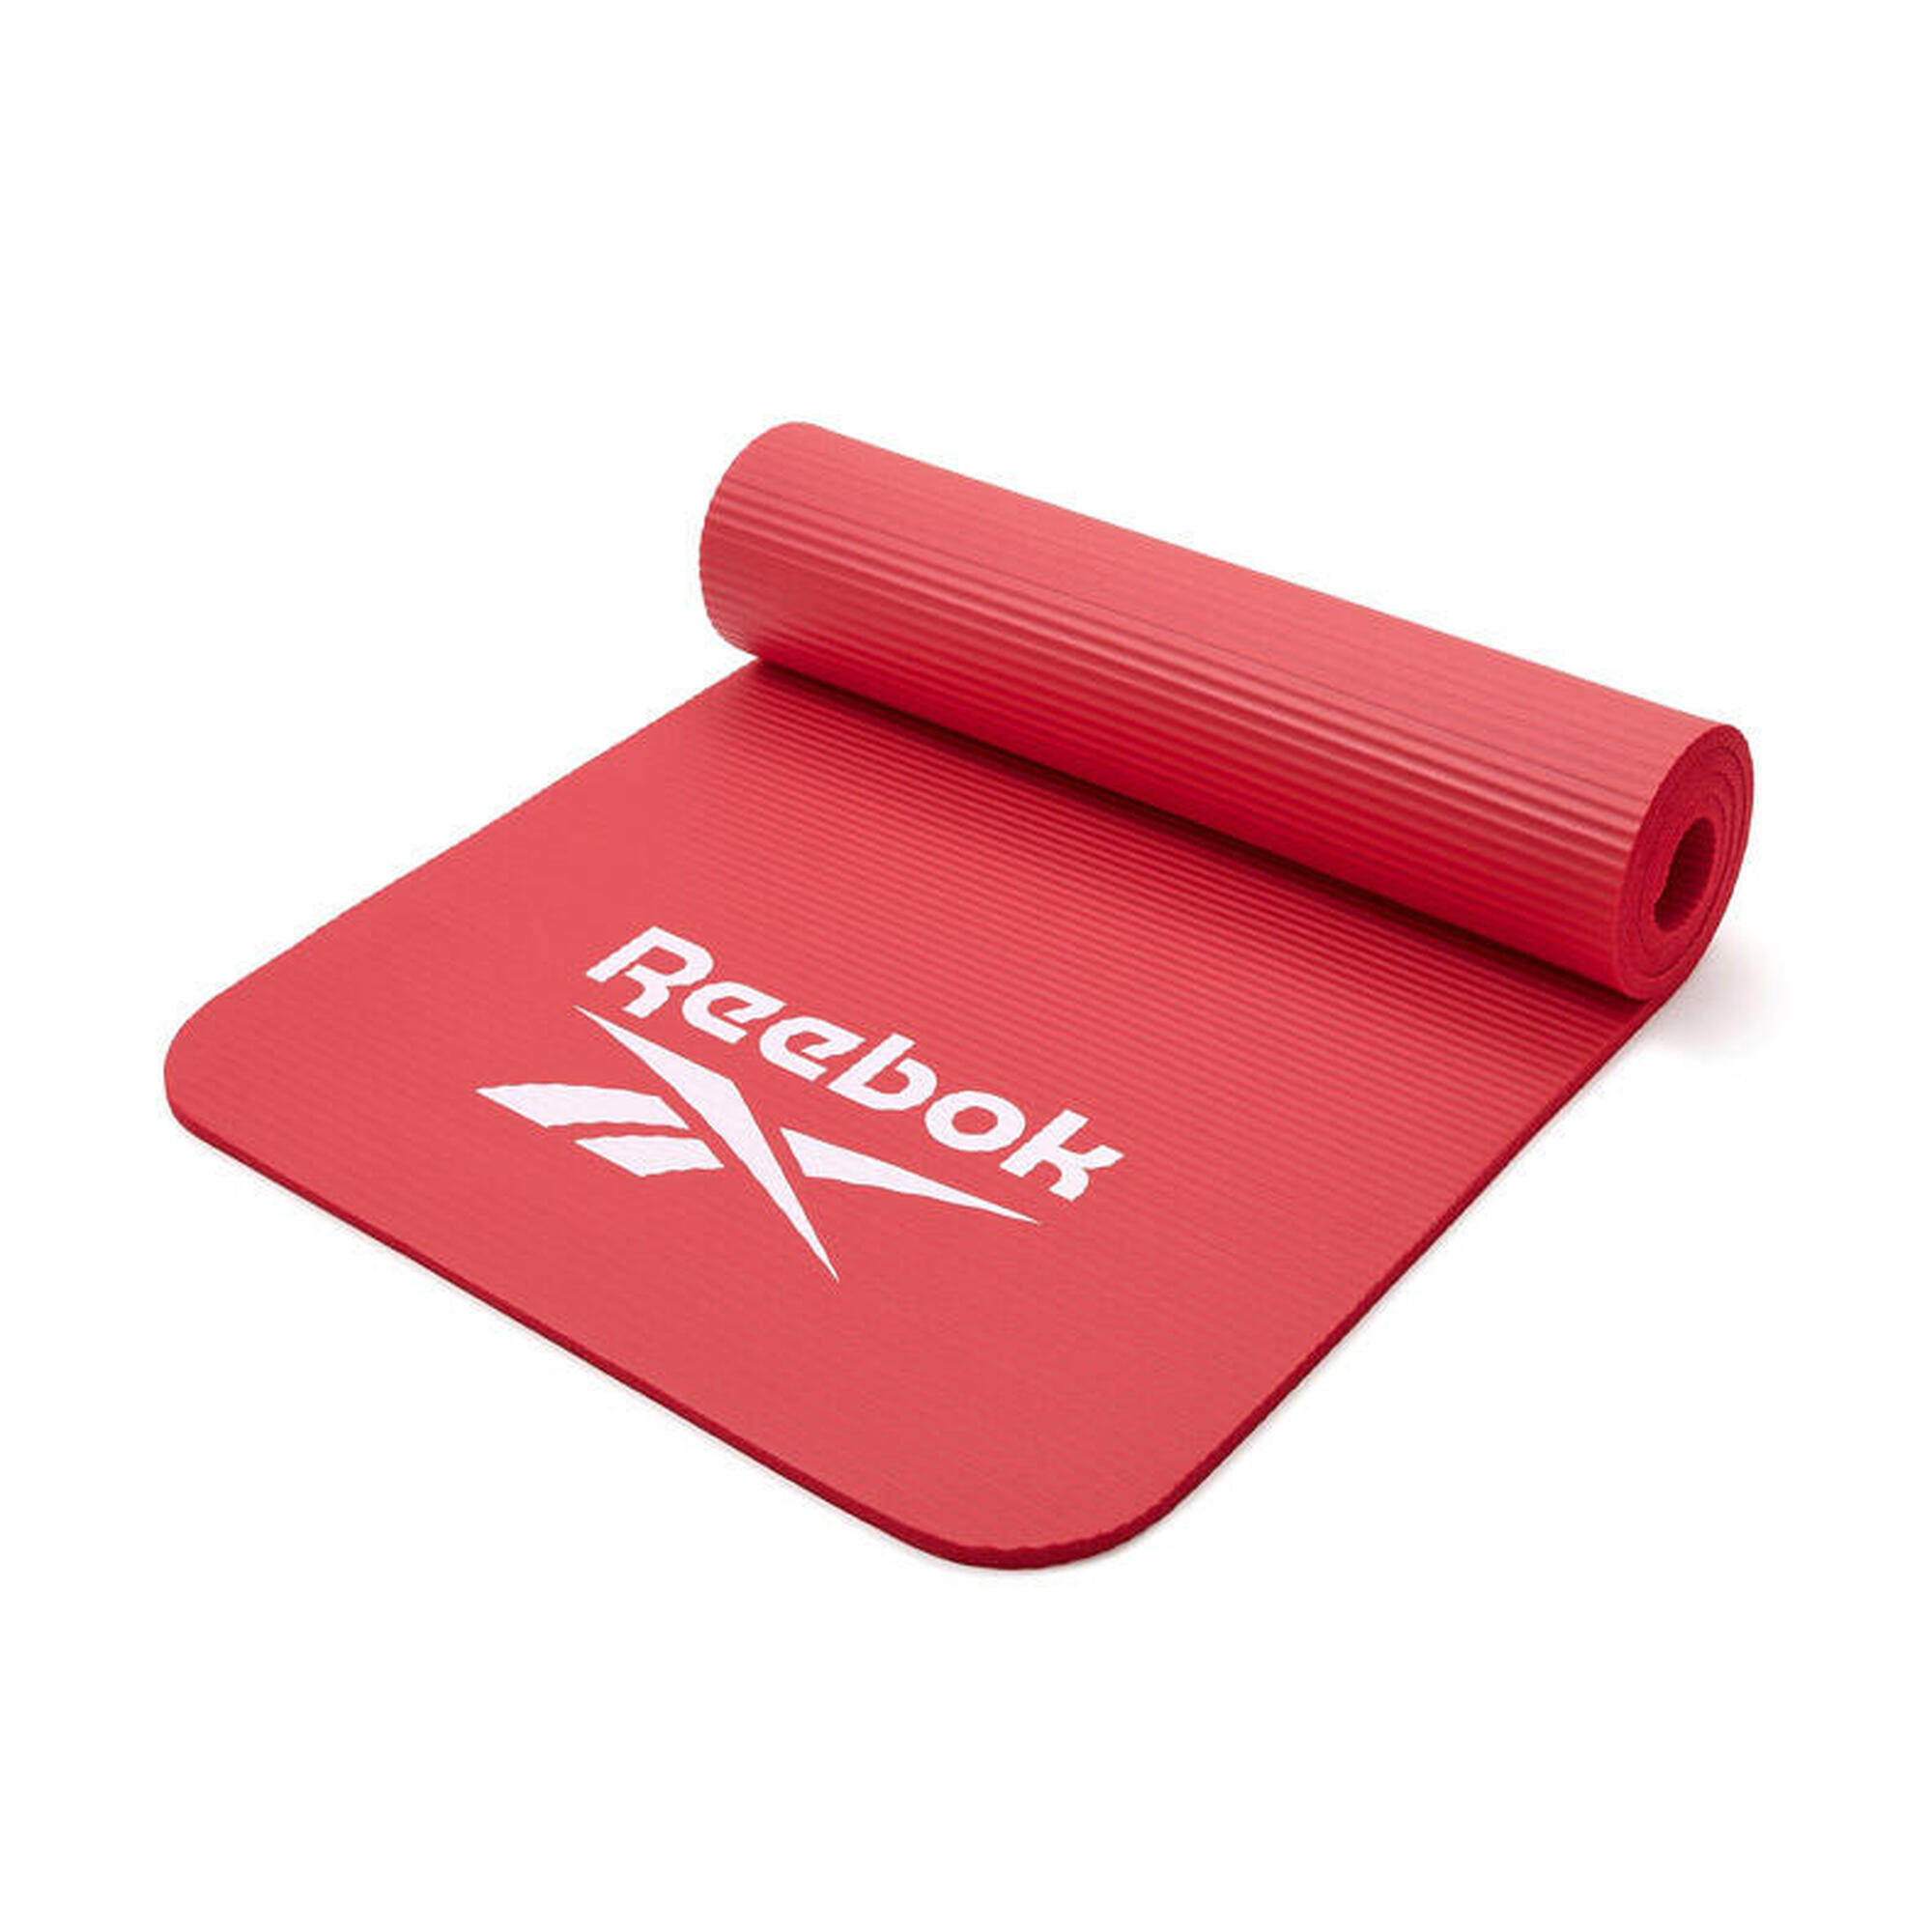 REEBOK Reebok 10mm Training Yoga Mat with Strap